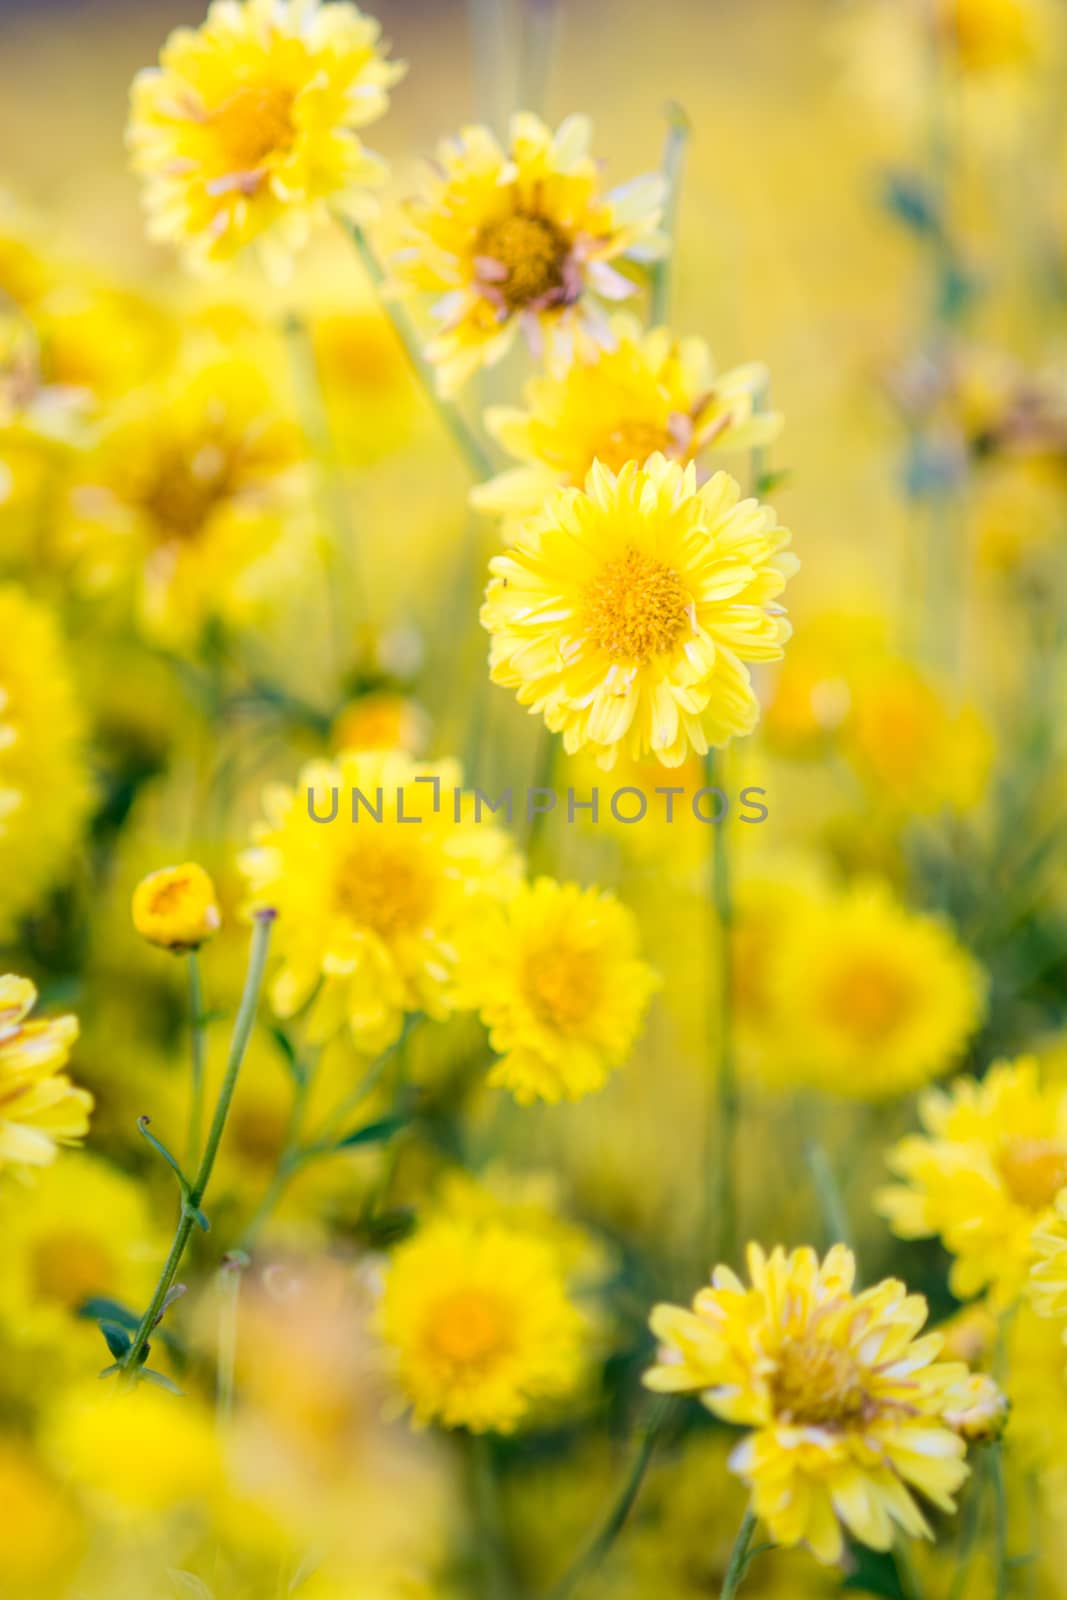 Yellow chrysanthemum flowers by yuiyuize